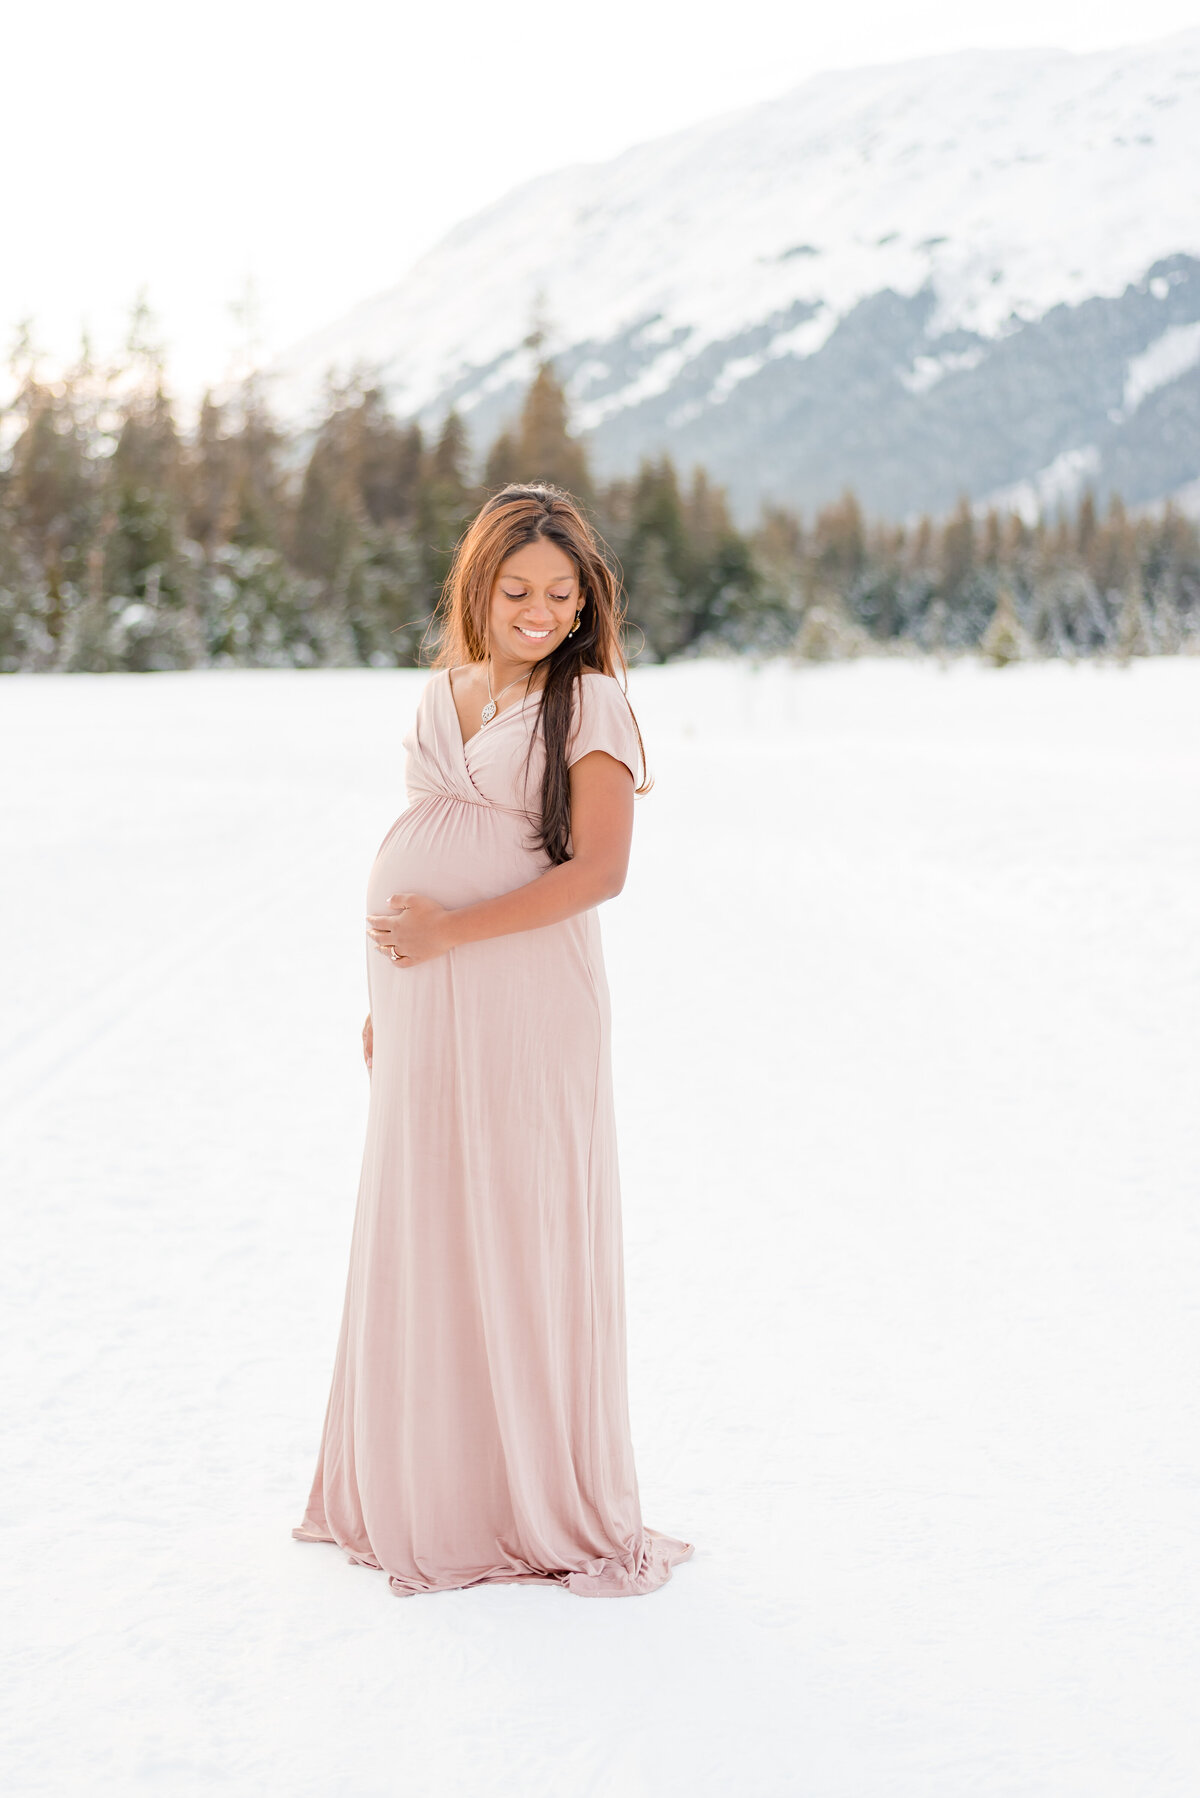 Alaska-Maternity-Photographer-17